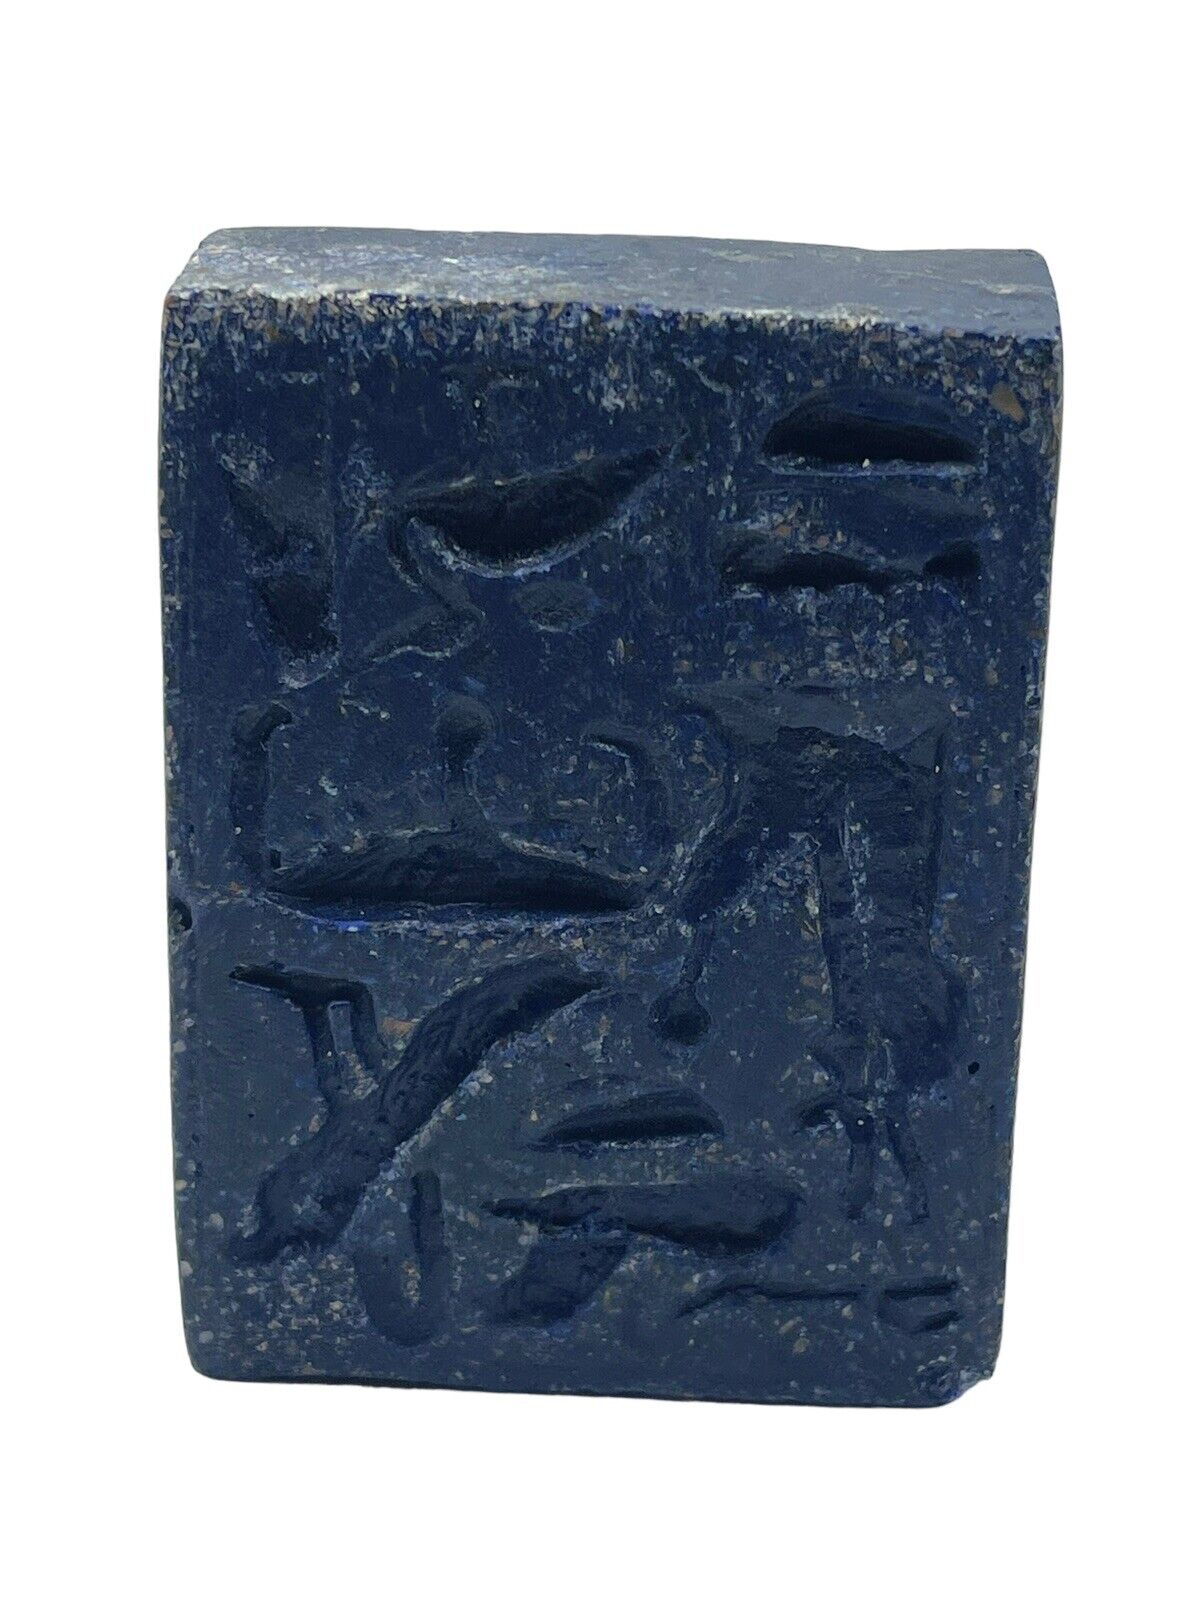 Egyptian Egypt Blue Stone Replica Hieroglyphics 2.75